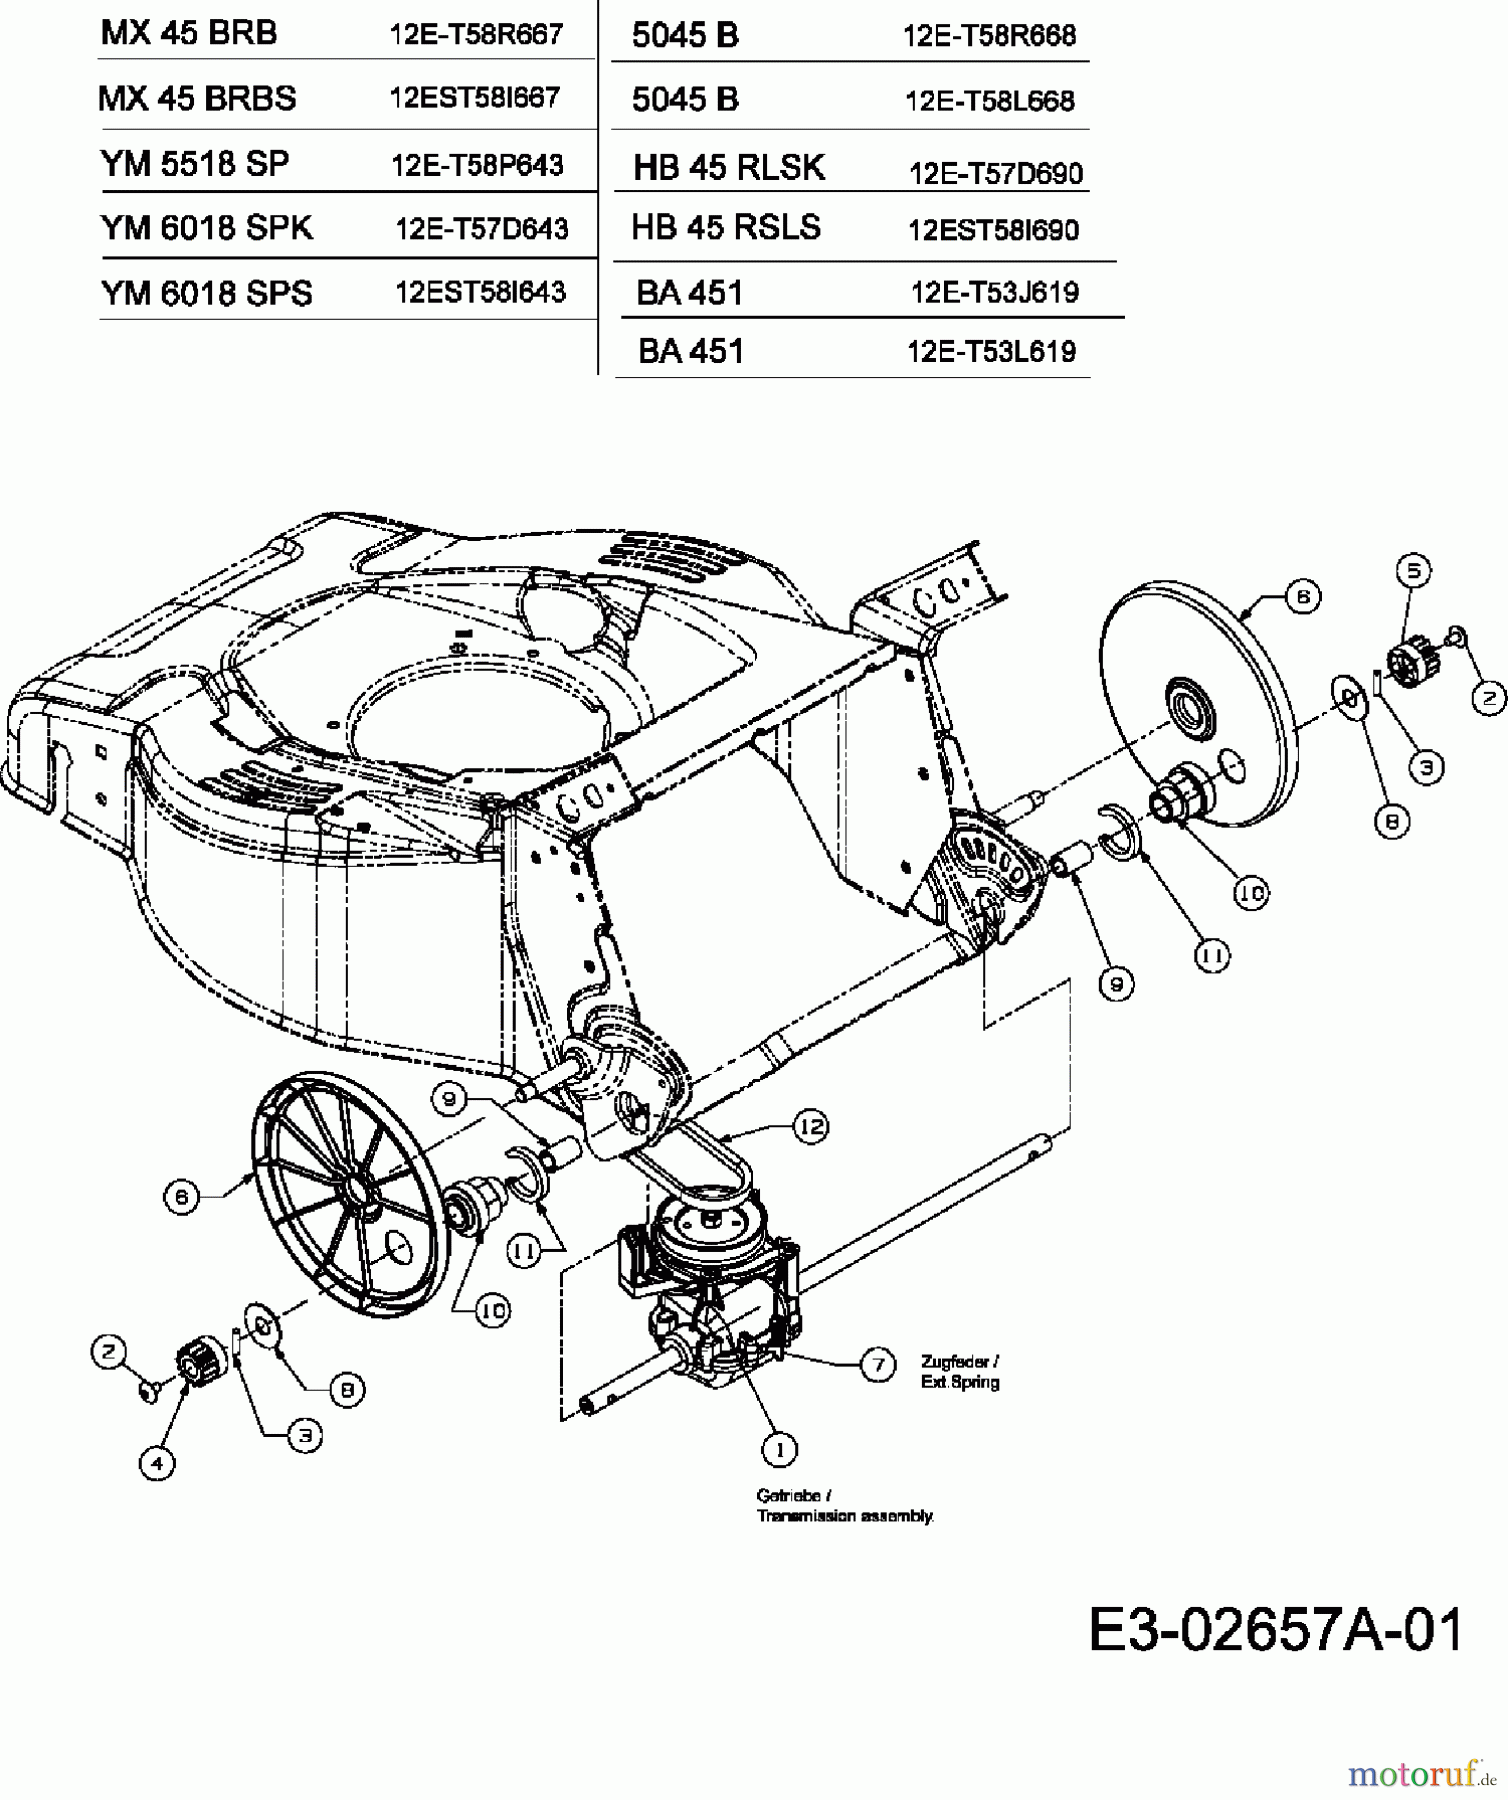  Gutbrod Petrol mower self propelled HB 45 RSLS 12EST58I690  (2006) Gearbox